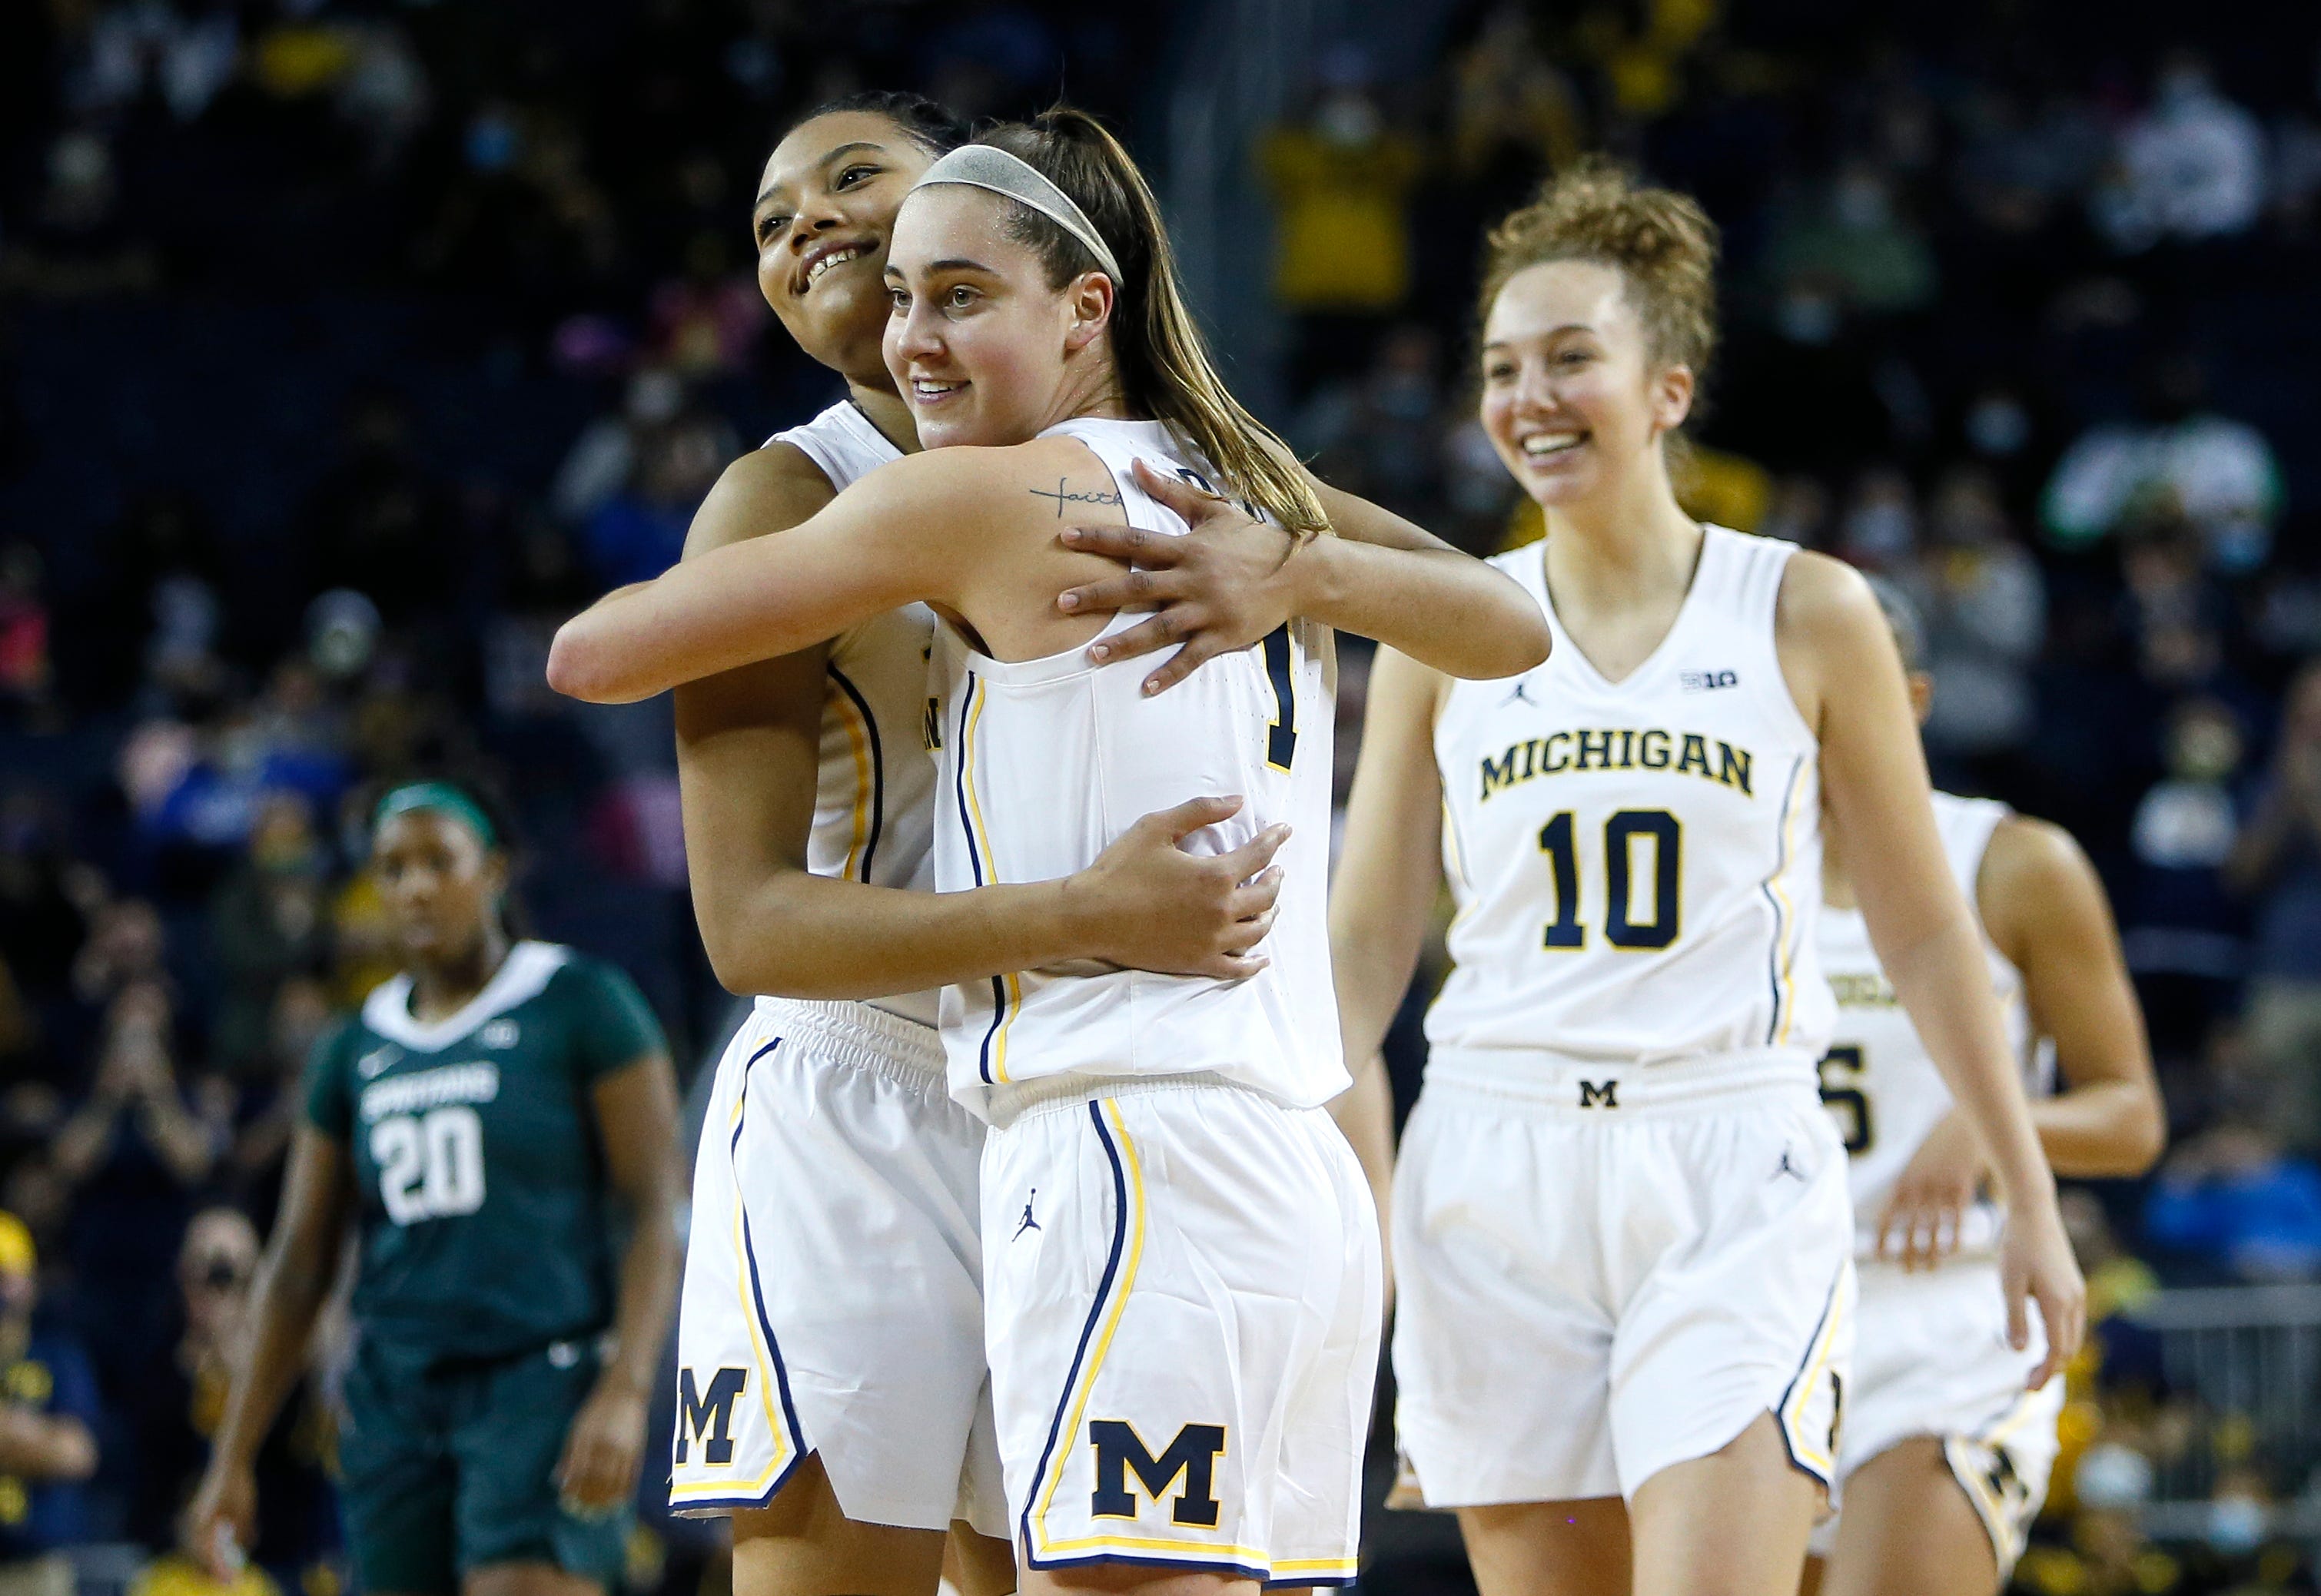 Unggulan ketiga wanita Michigan, akan menjadi tuan rumah akhir pekan Turnamen NCAA